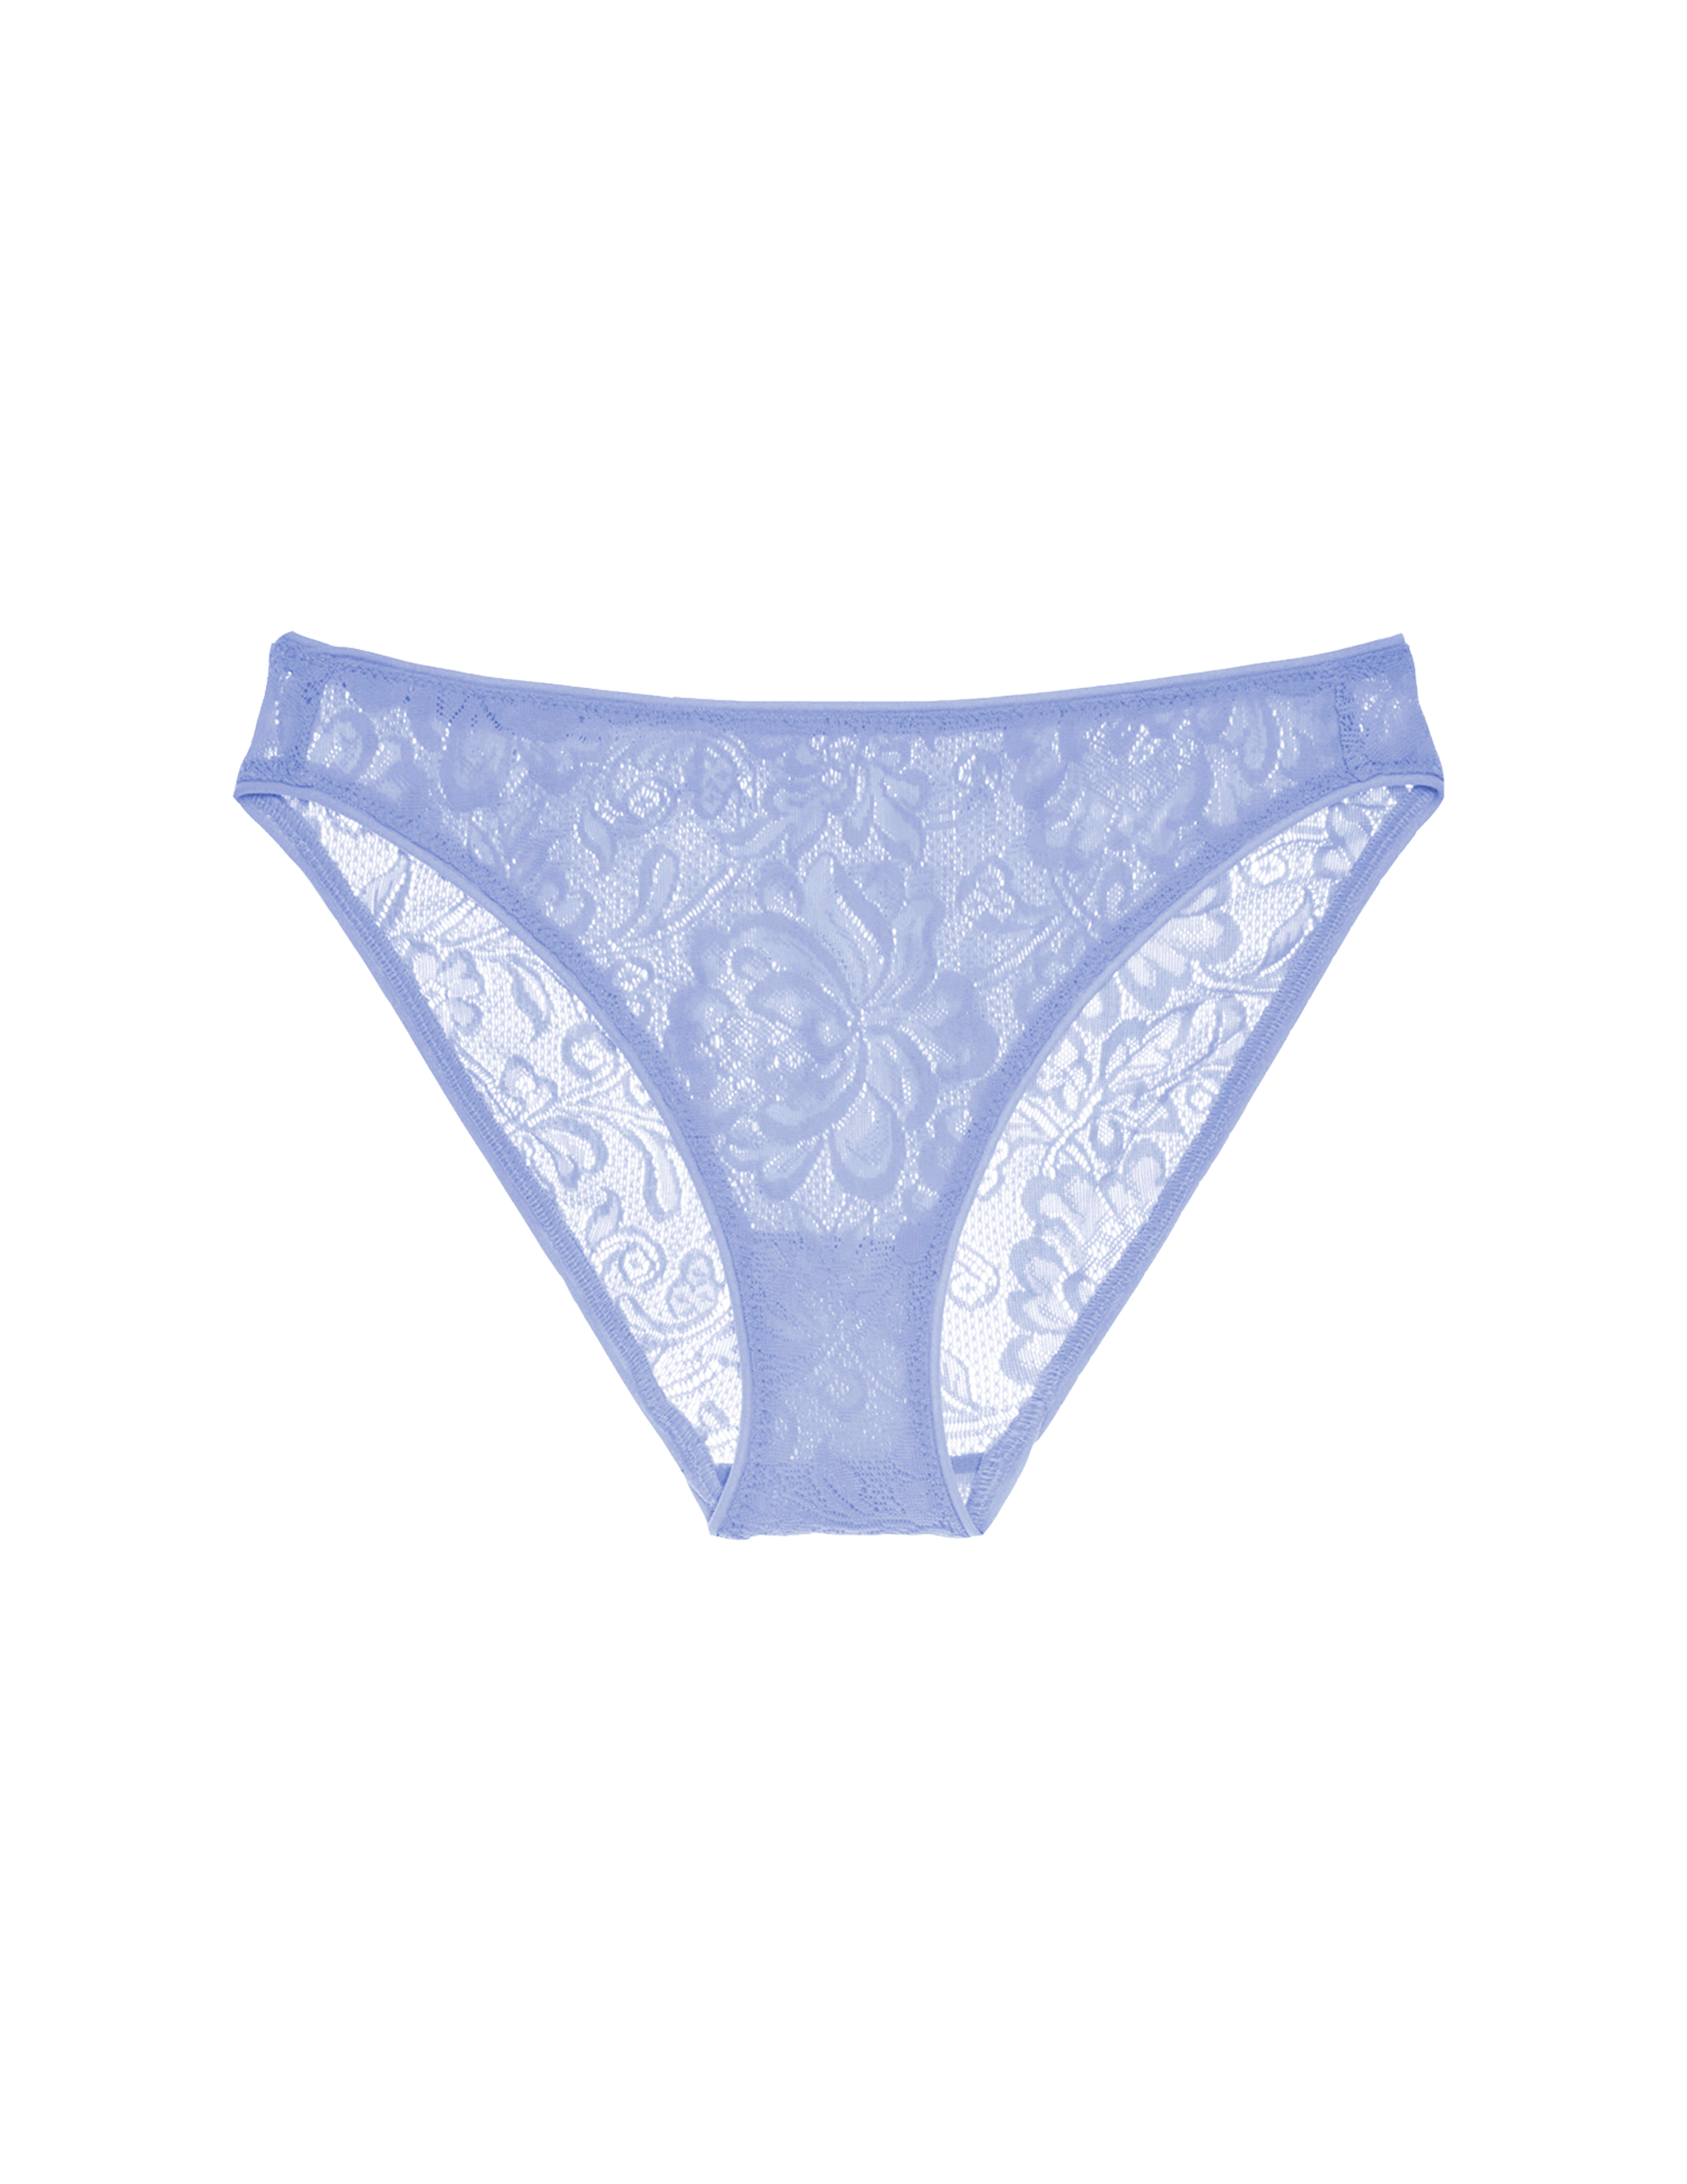 Silk panty bikini brief women's silk underwear | Ivory, Blue, Red, Honey